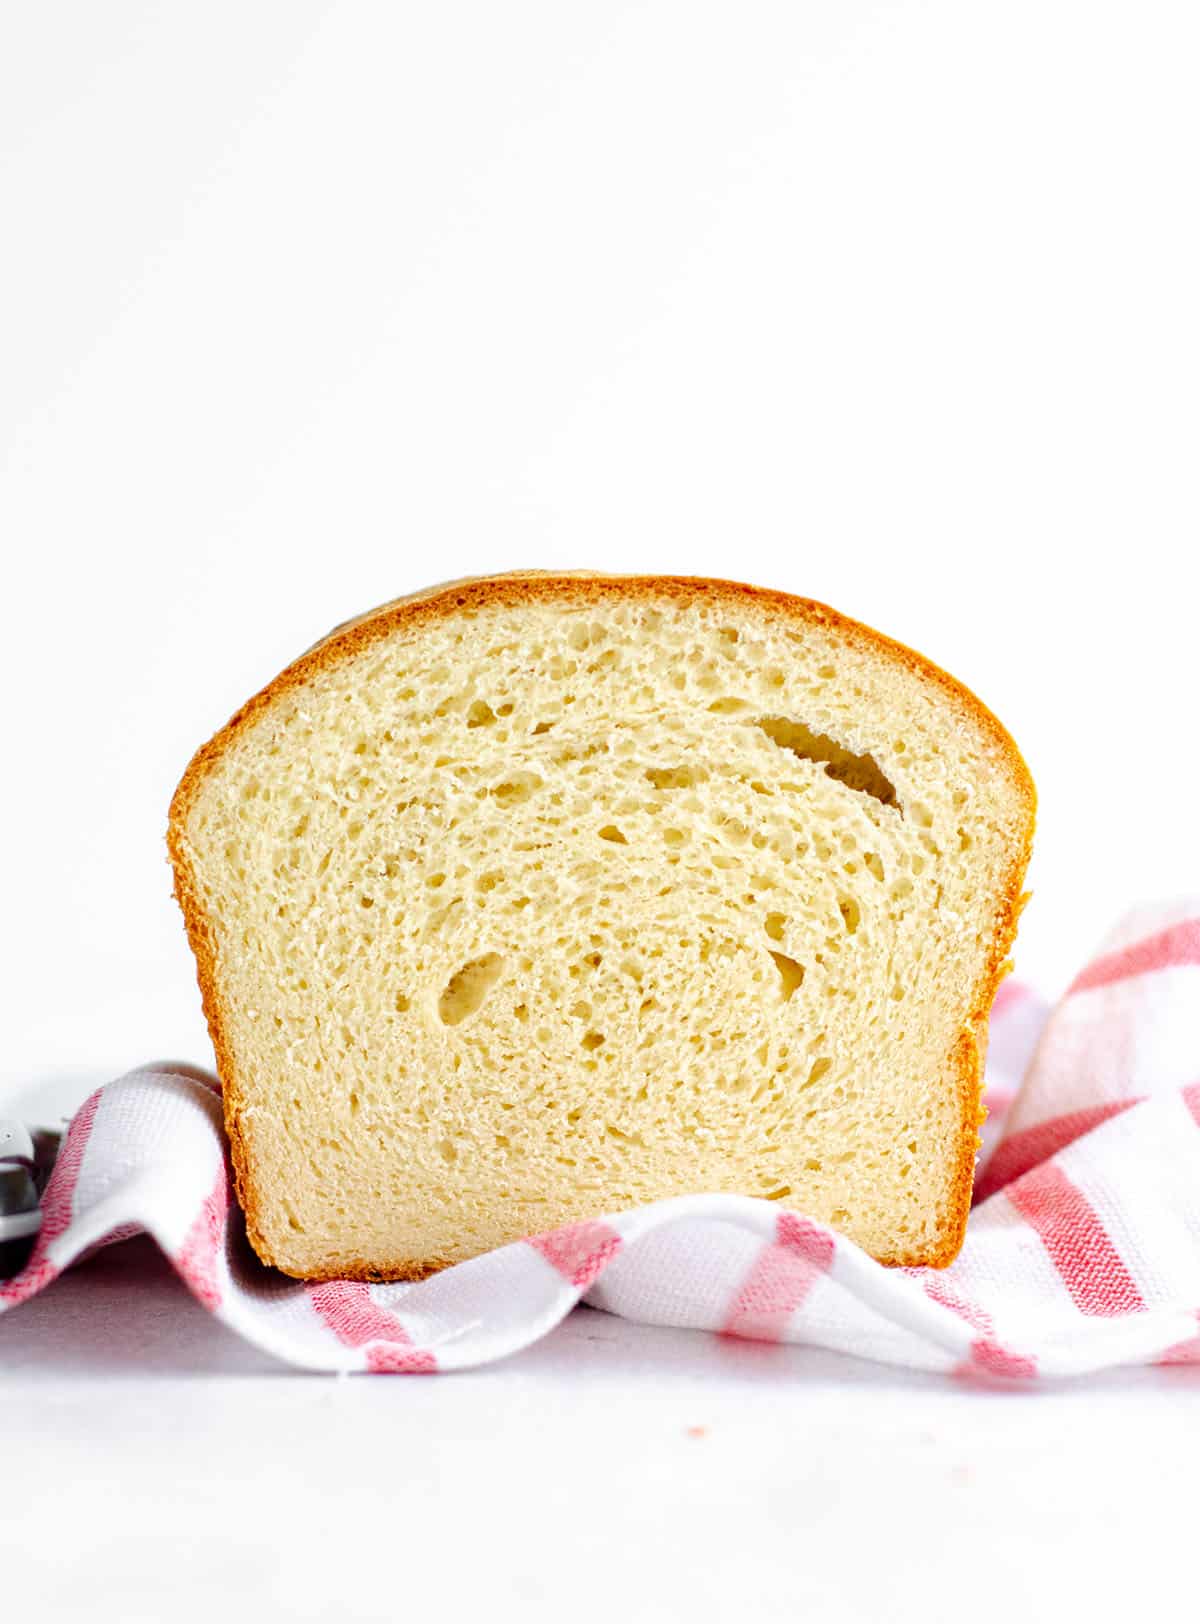 White Sandwich Bread: Fluffy, sturdy sandwich bread made right in your own kitchen.